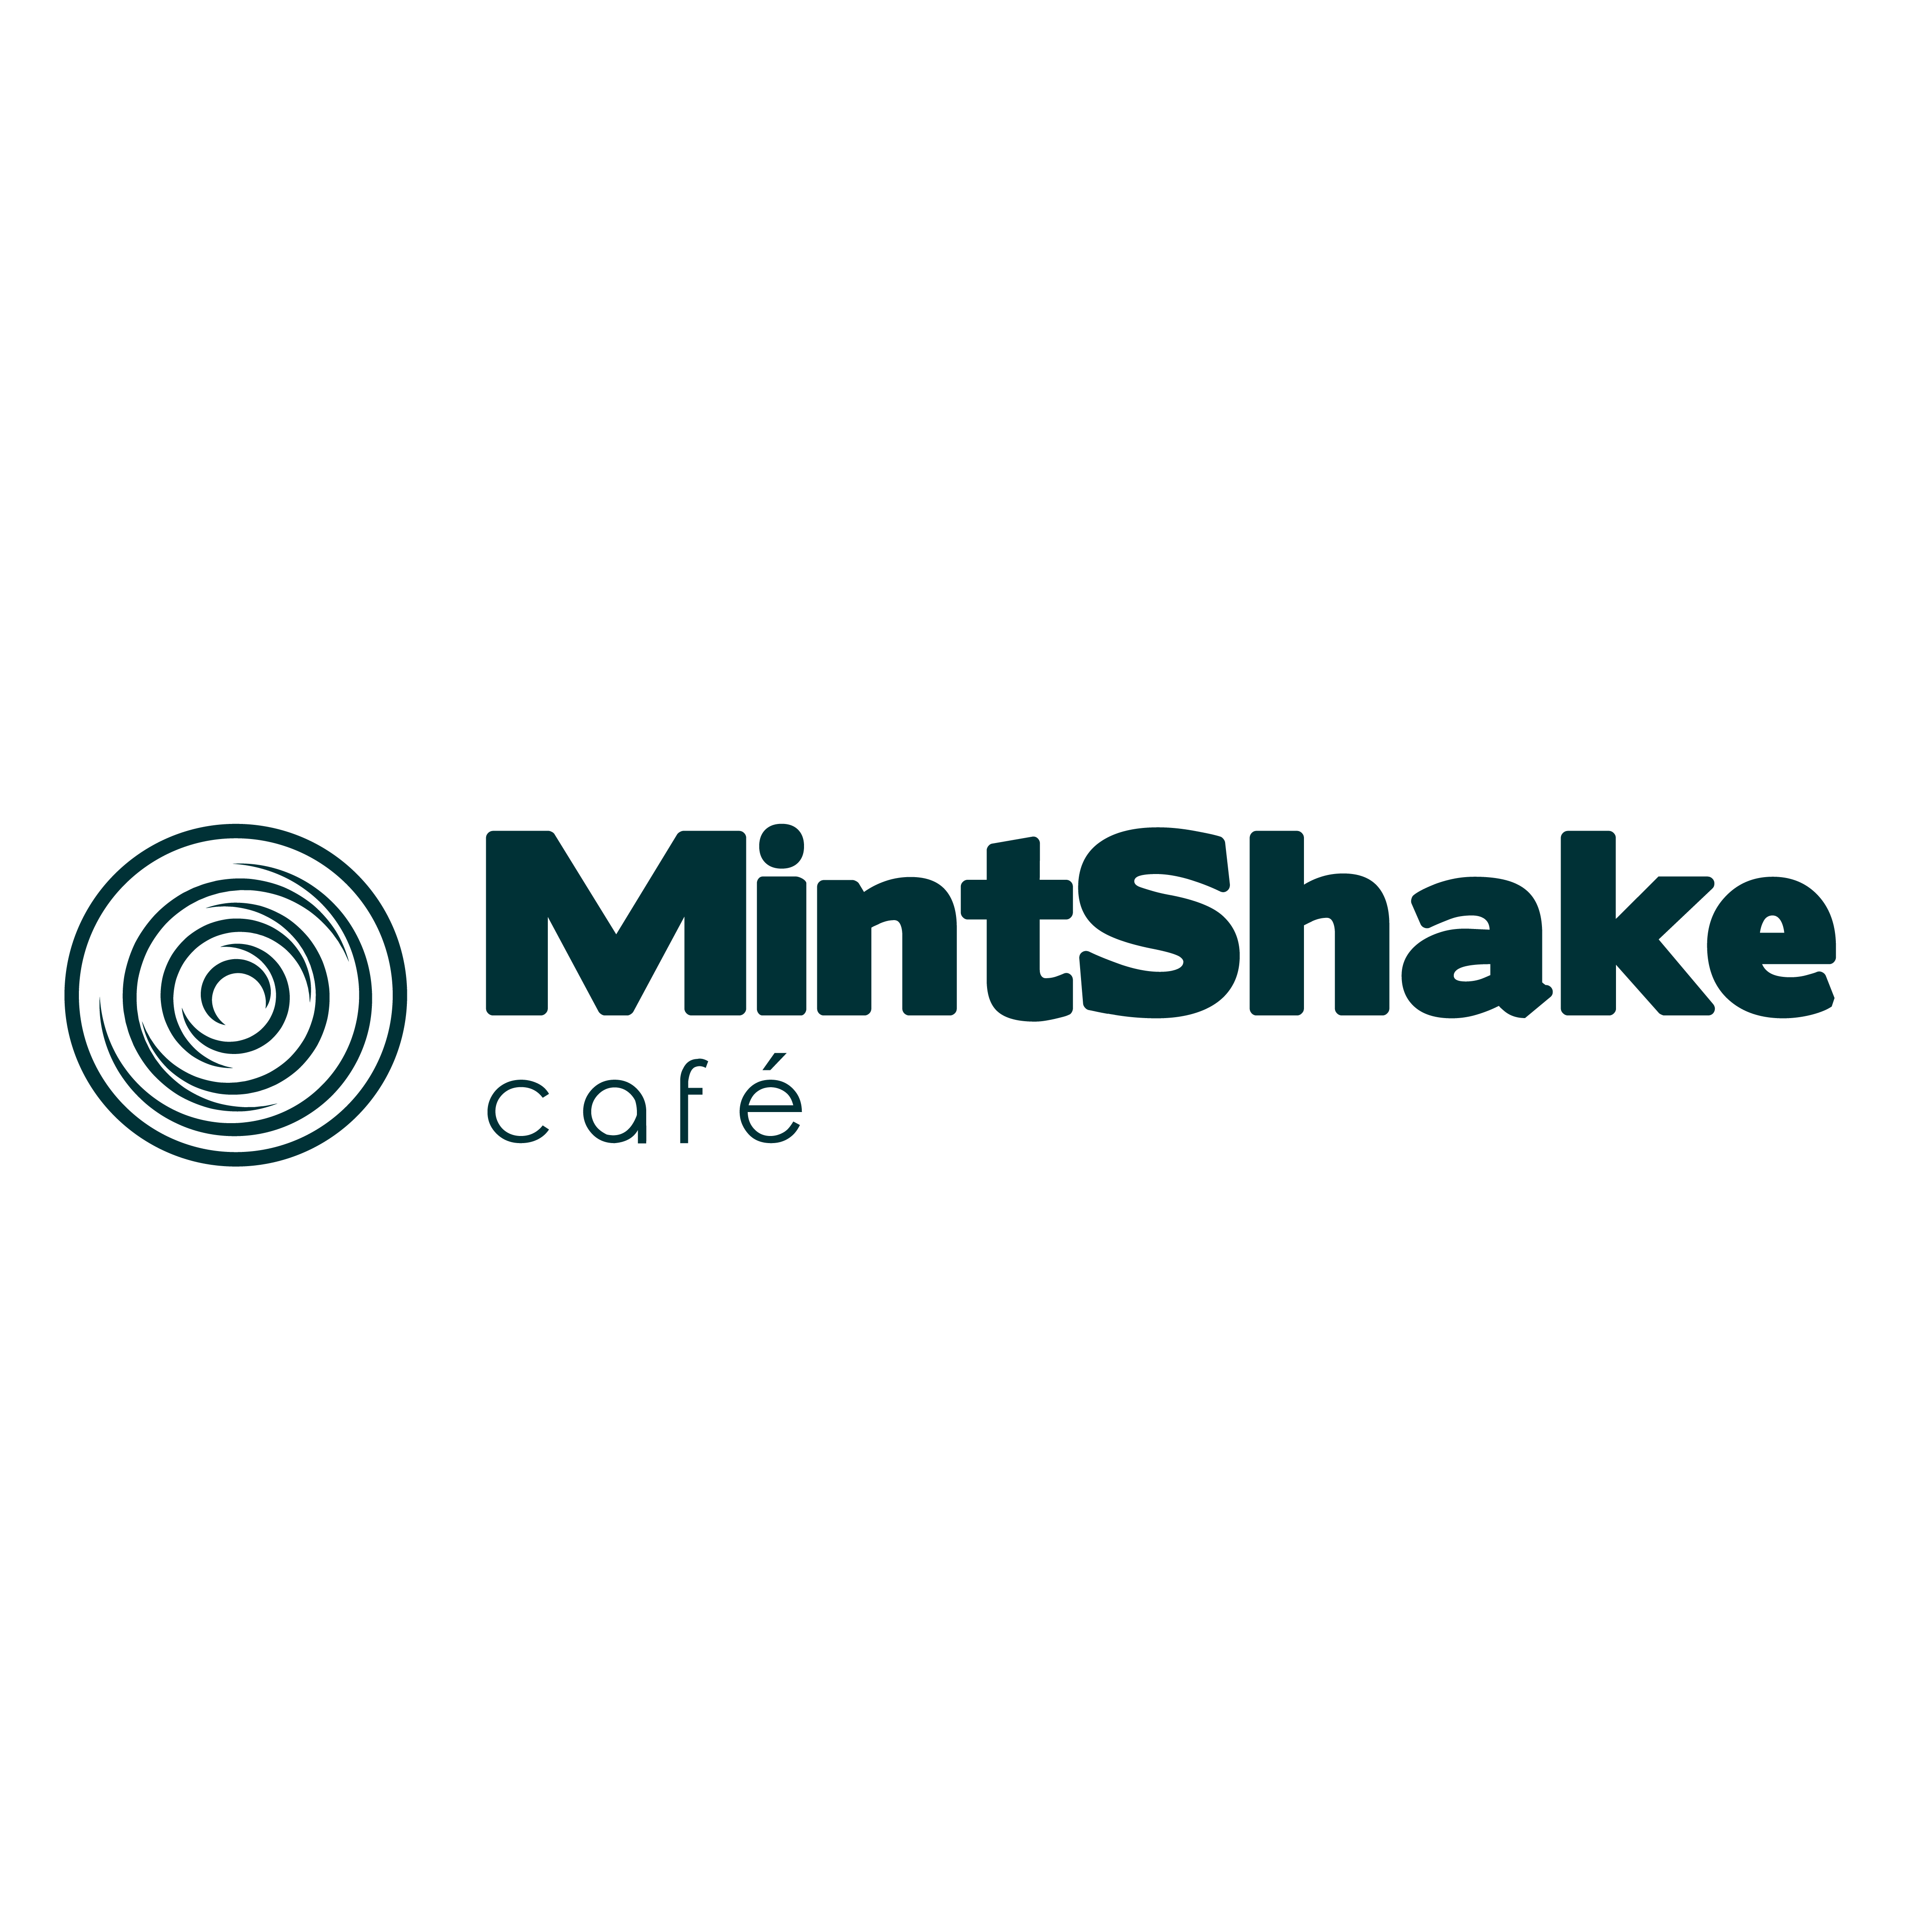 MintShake Café - Restaurant - Lugano - 091 972 40 40 Switzerland | ShowMeLocal.com